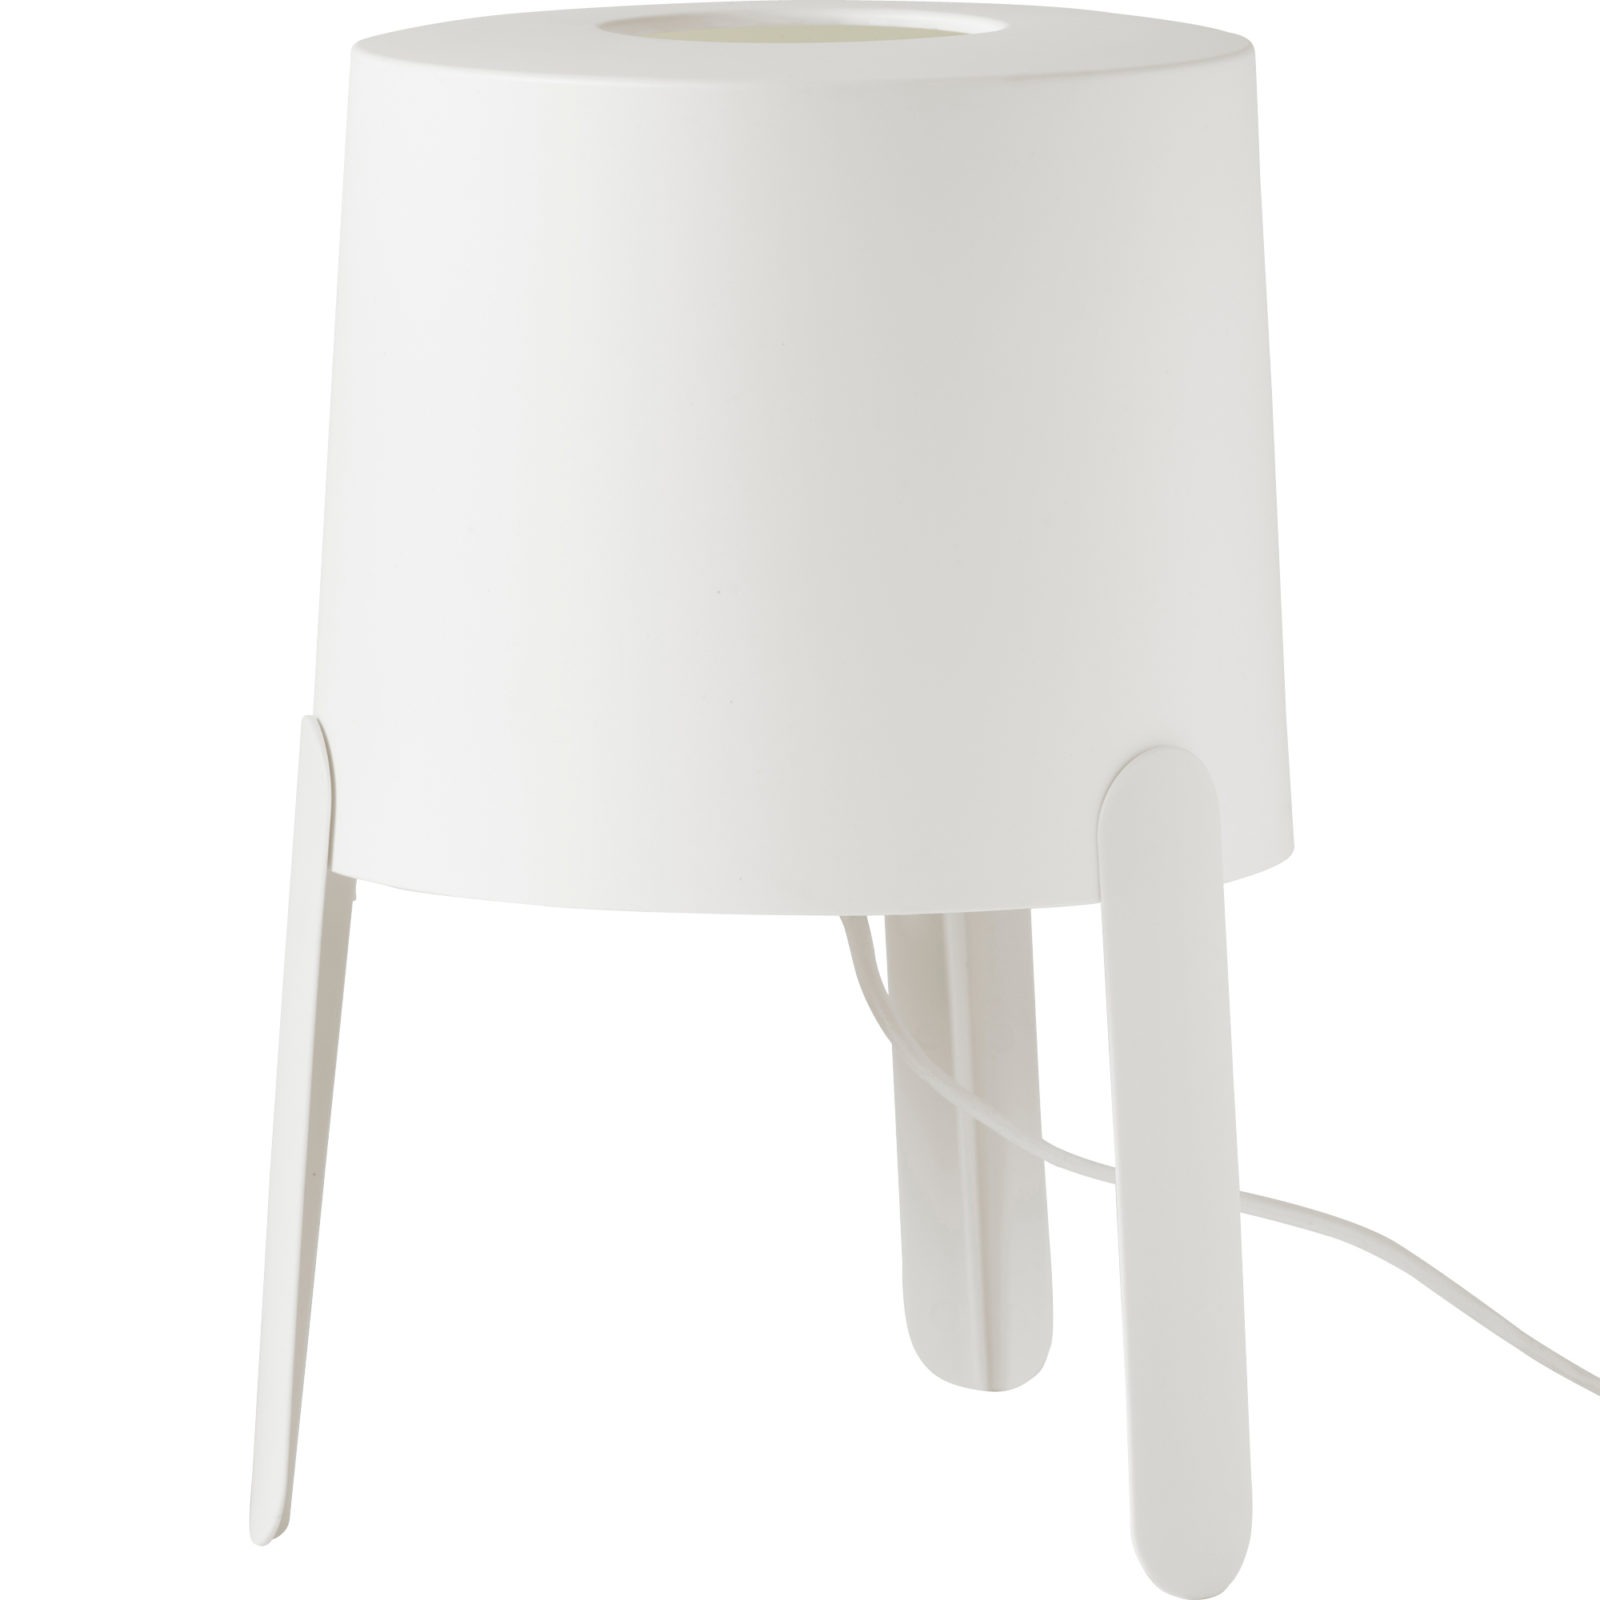 White three-legged table lamp with a soft light, TVÄRS.